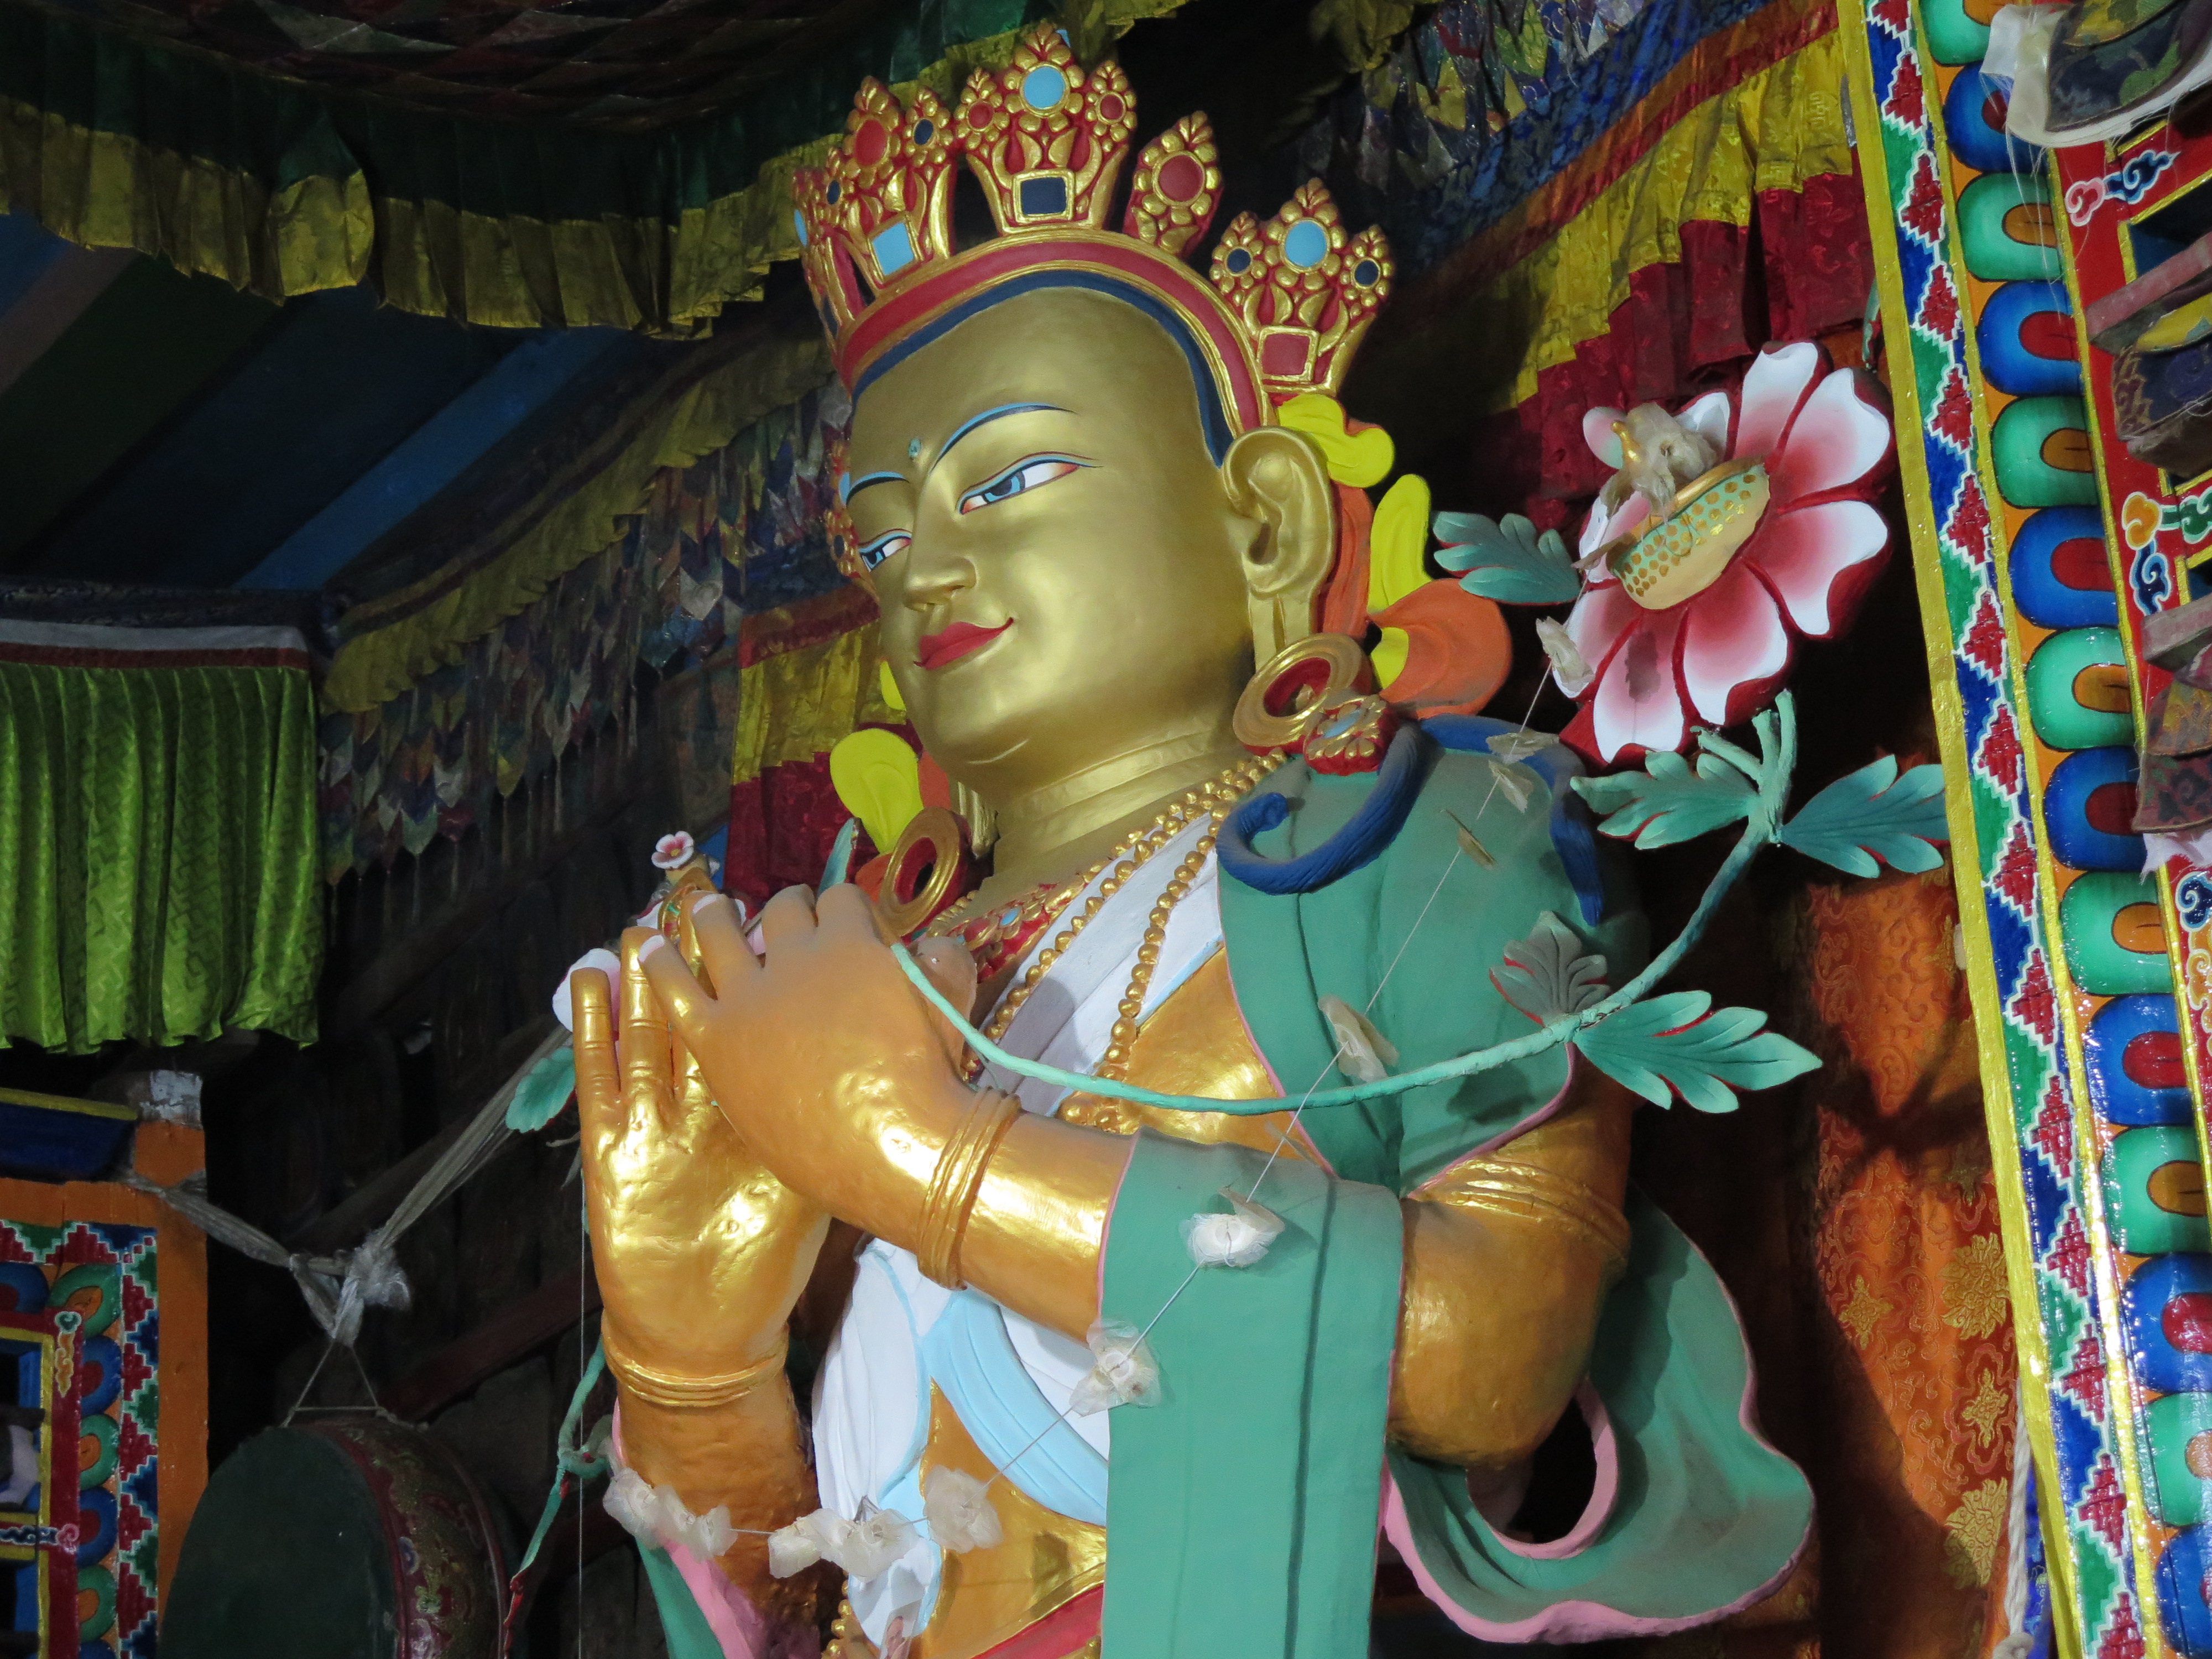 Khumjung Monastery